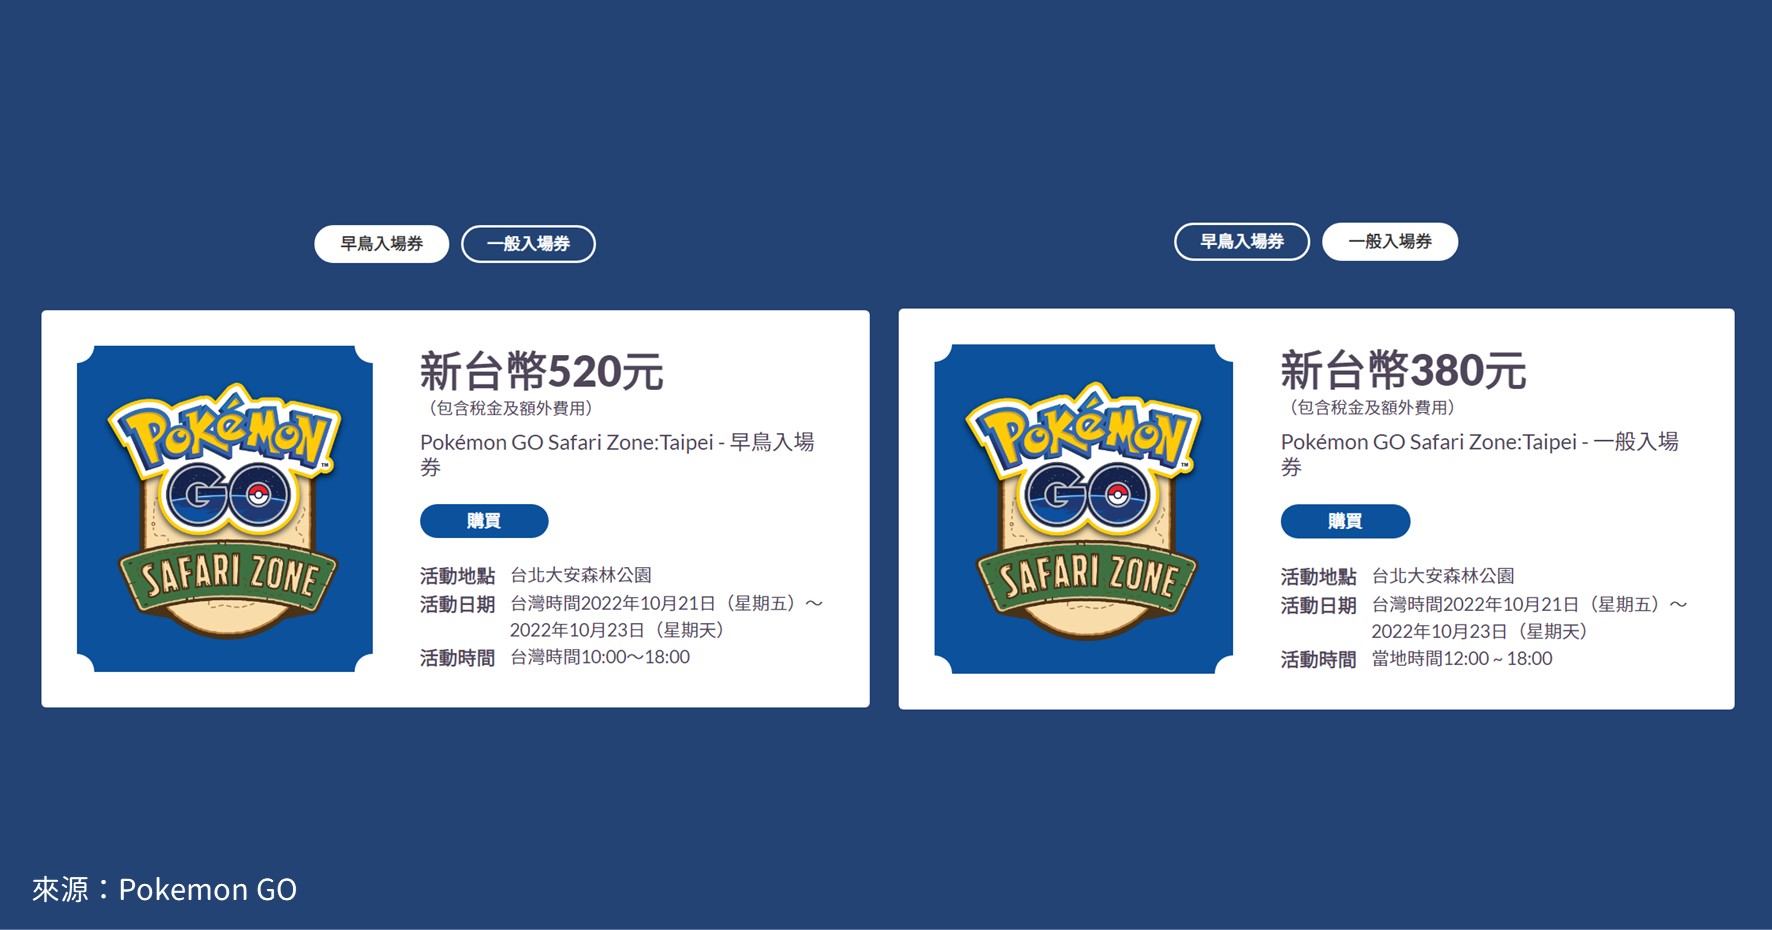 Pokemon GO「Safari Zone: Taipei」重點整理：台北打卡夯起來！大安森林公園3日瘋狂抓寶！超級拉帝亞斯、超級拉帝歐斯再次回歸